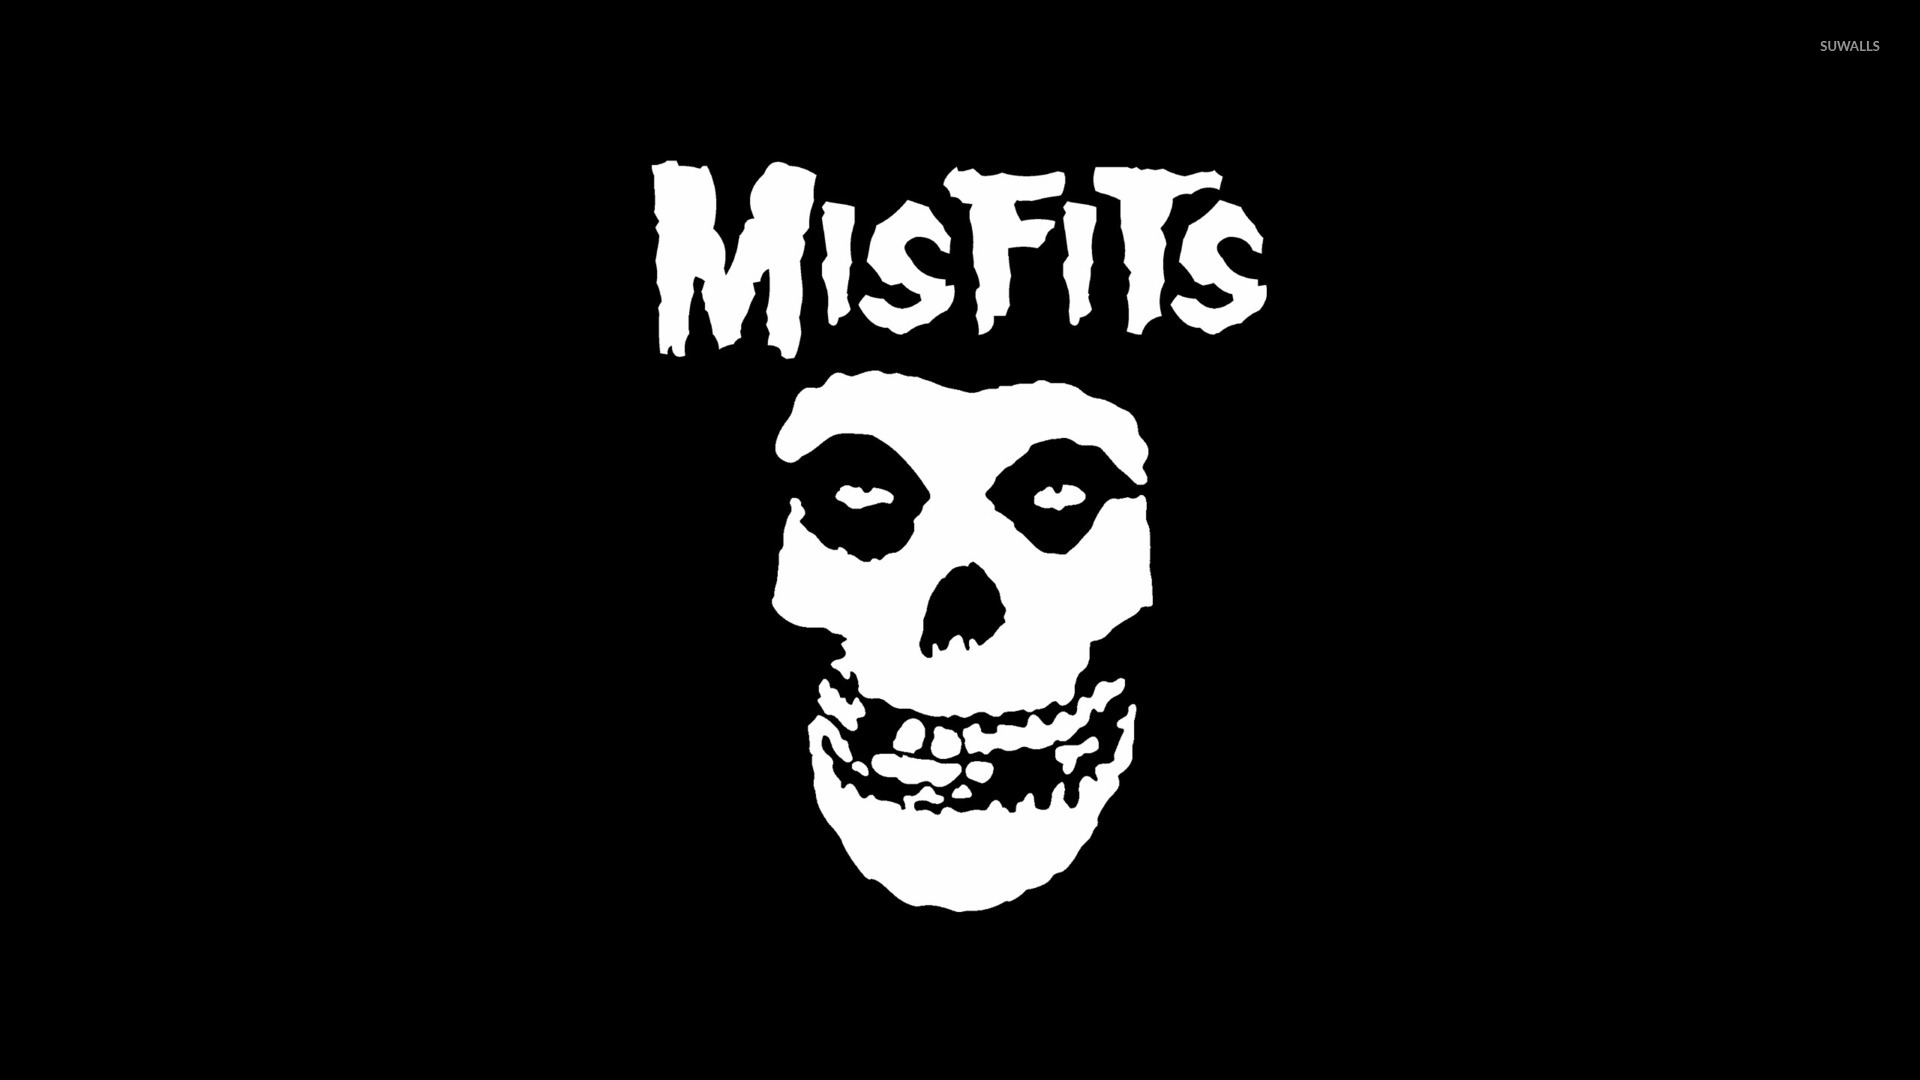 [73+] Misfits Wallpapers on WallpaperSafari